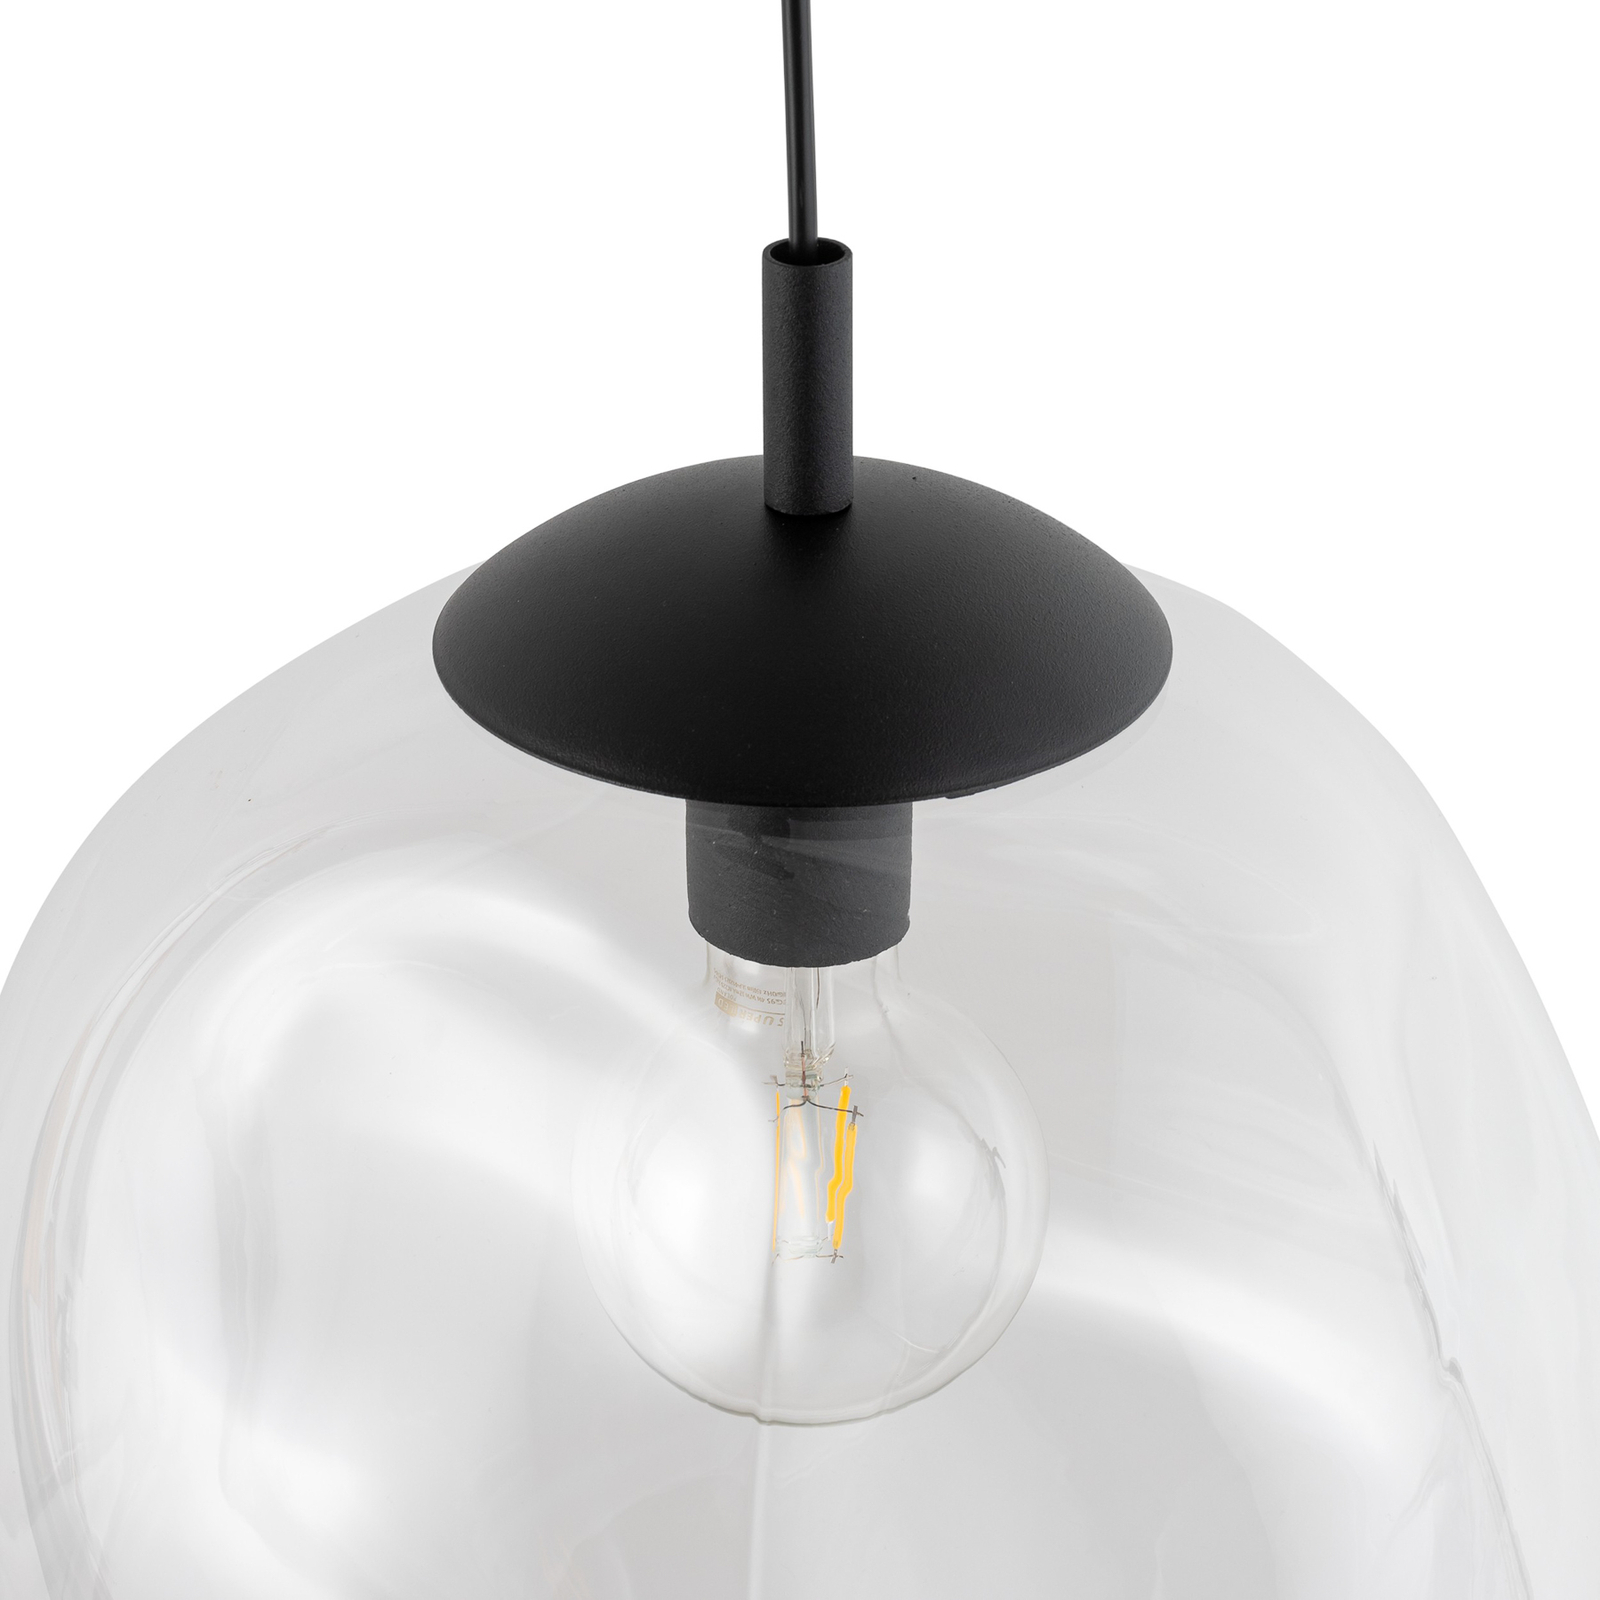 Glazen hanglamp Sol, Ø 35cm, zwart/helder